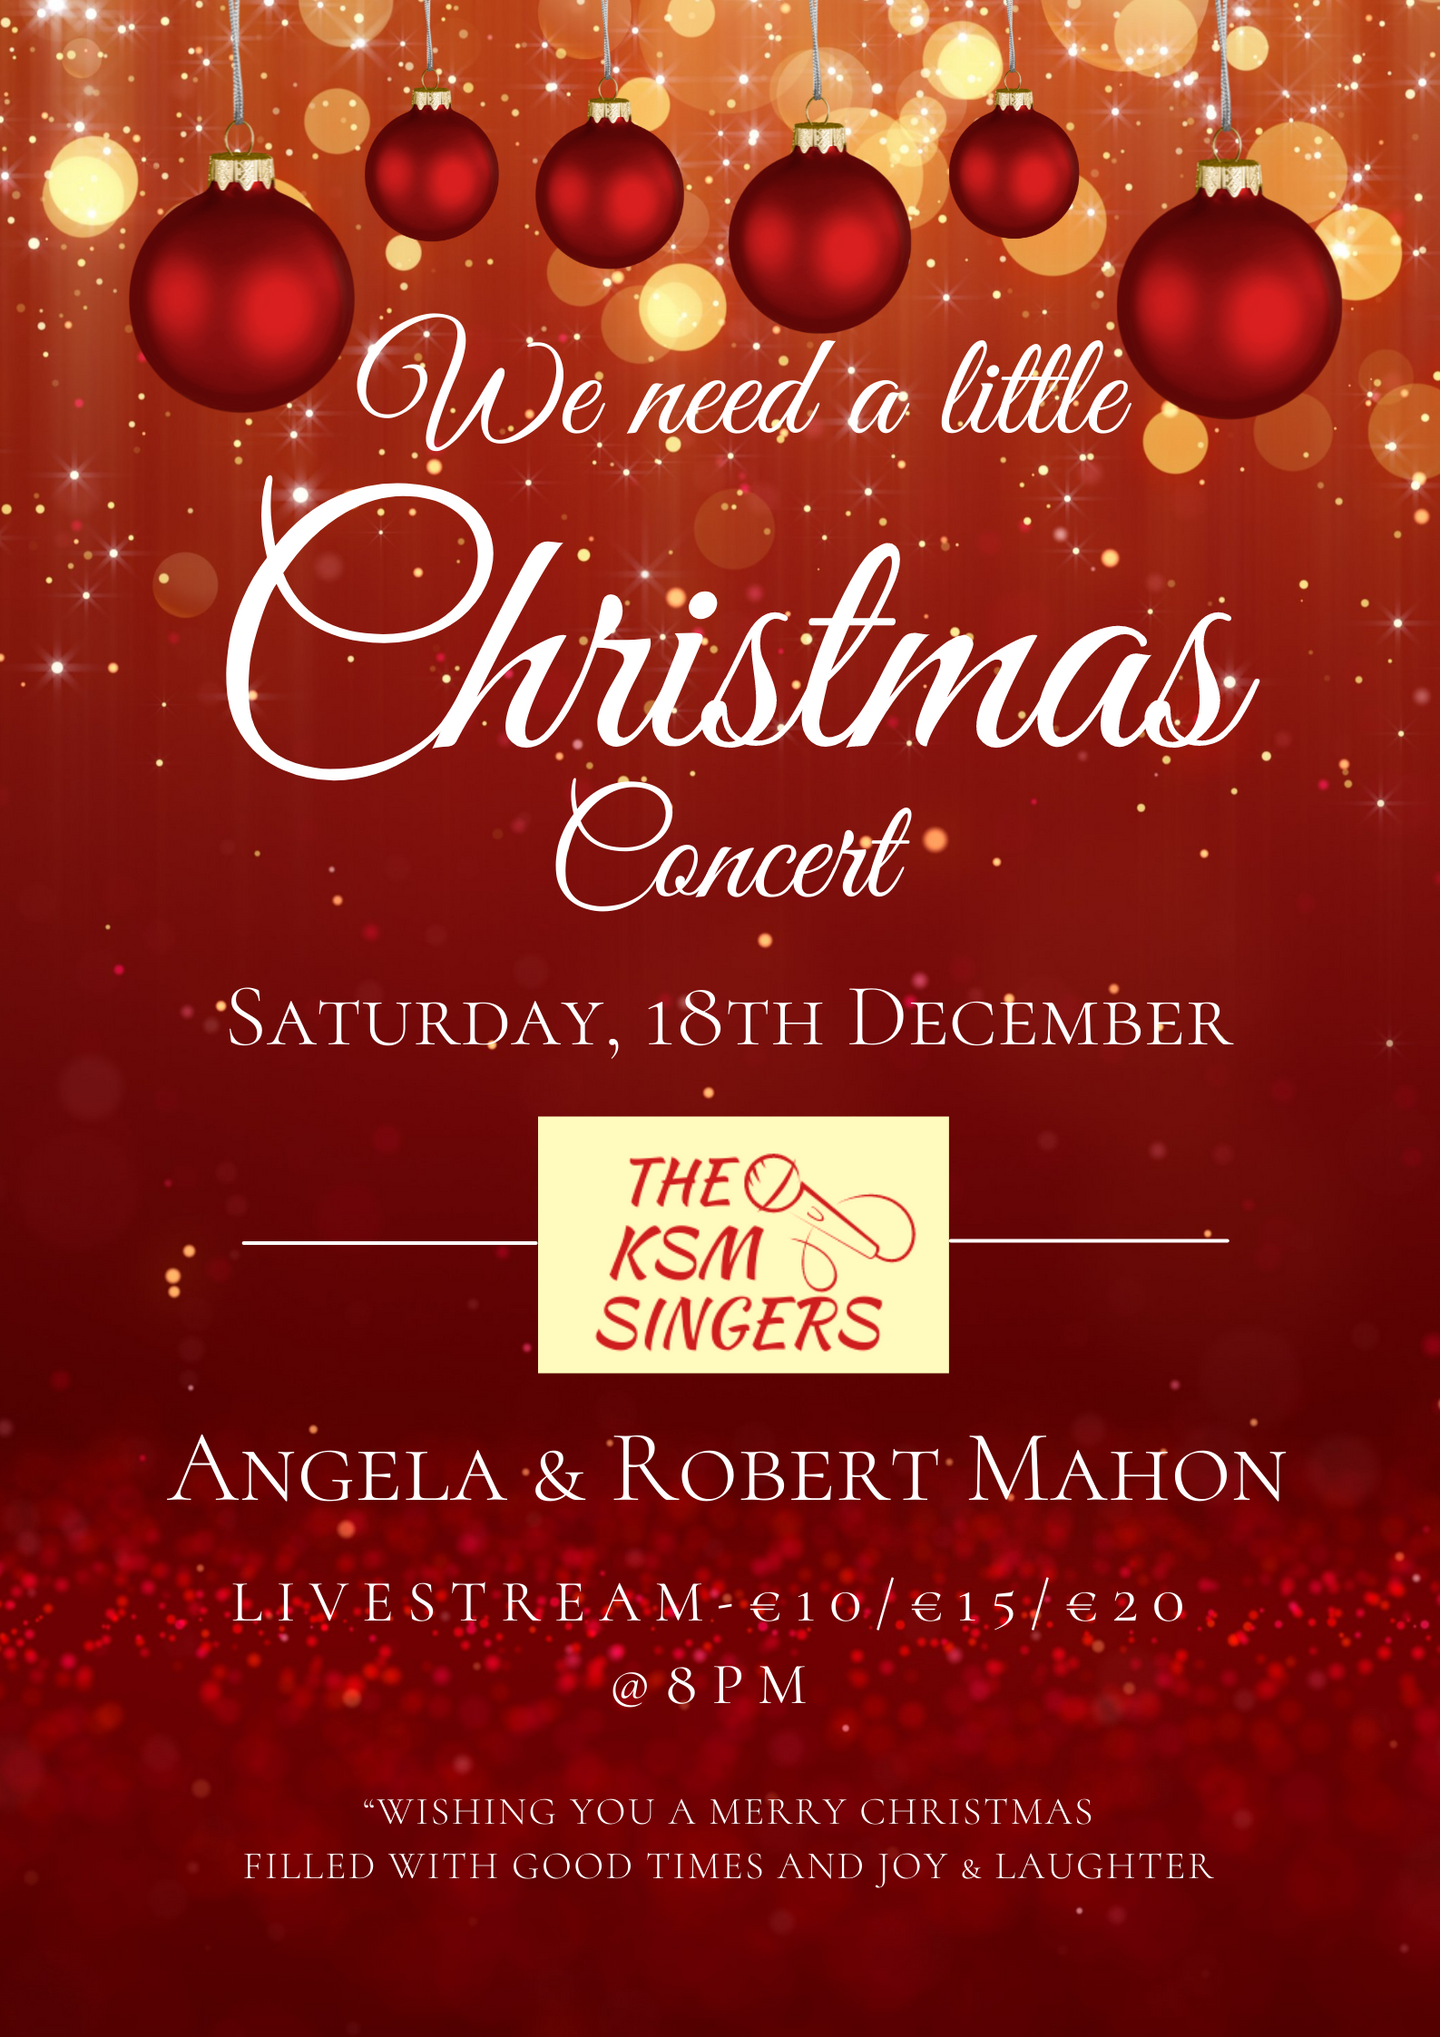 We need a little Christmas Concert -Livestream